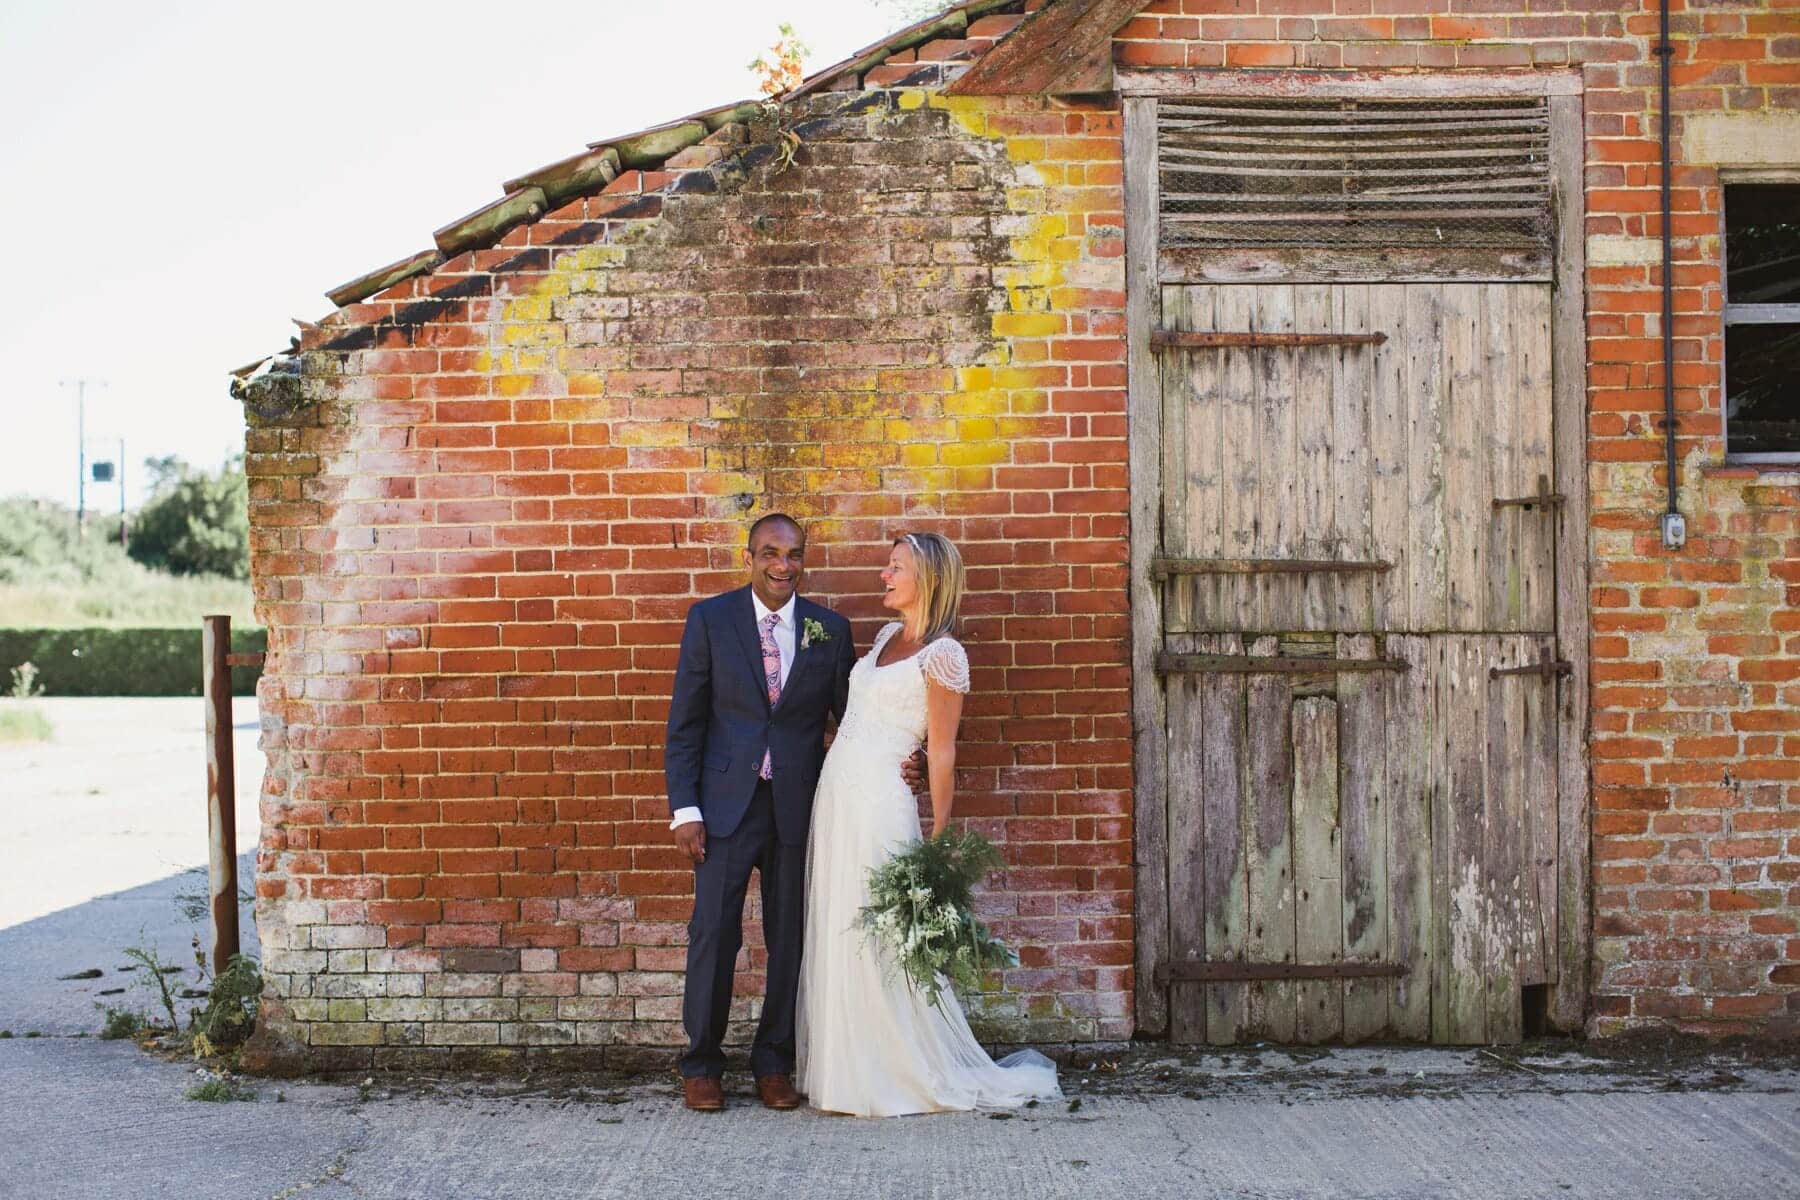 Bruisyard Hall and Barn wedding photography couple portraits